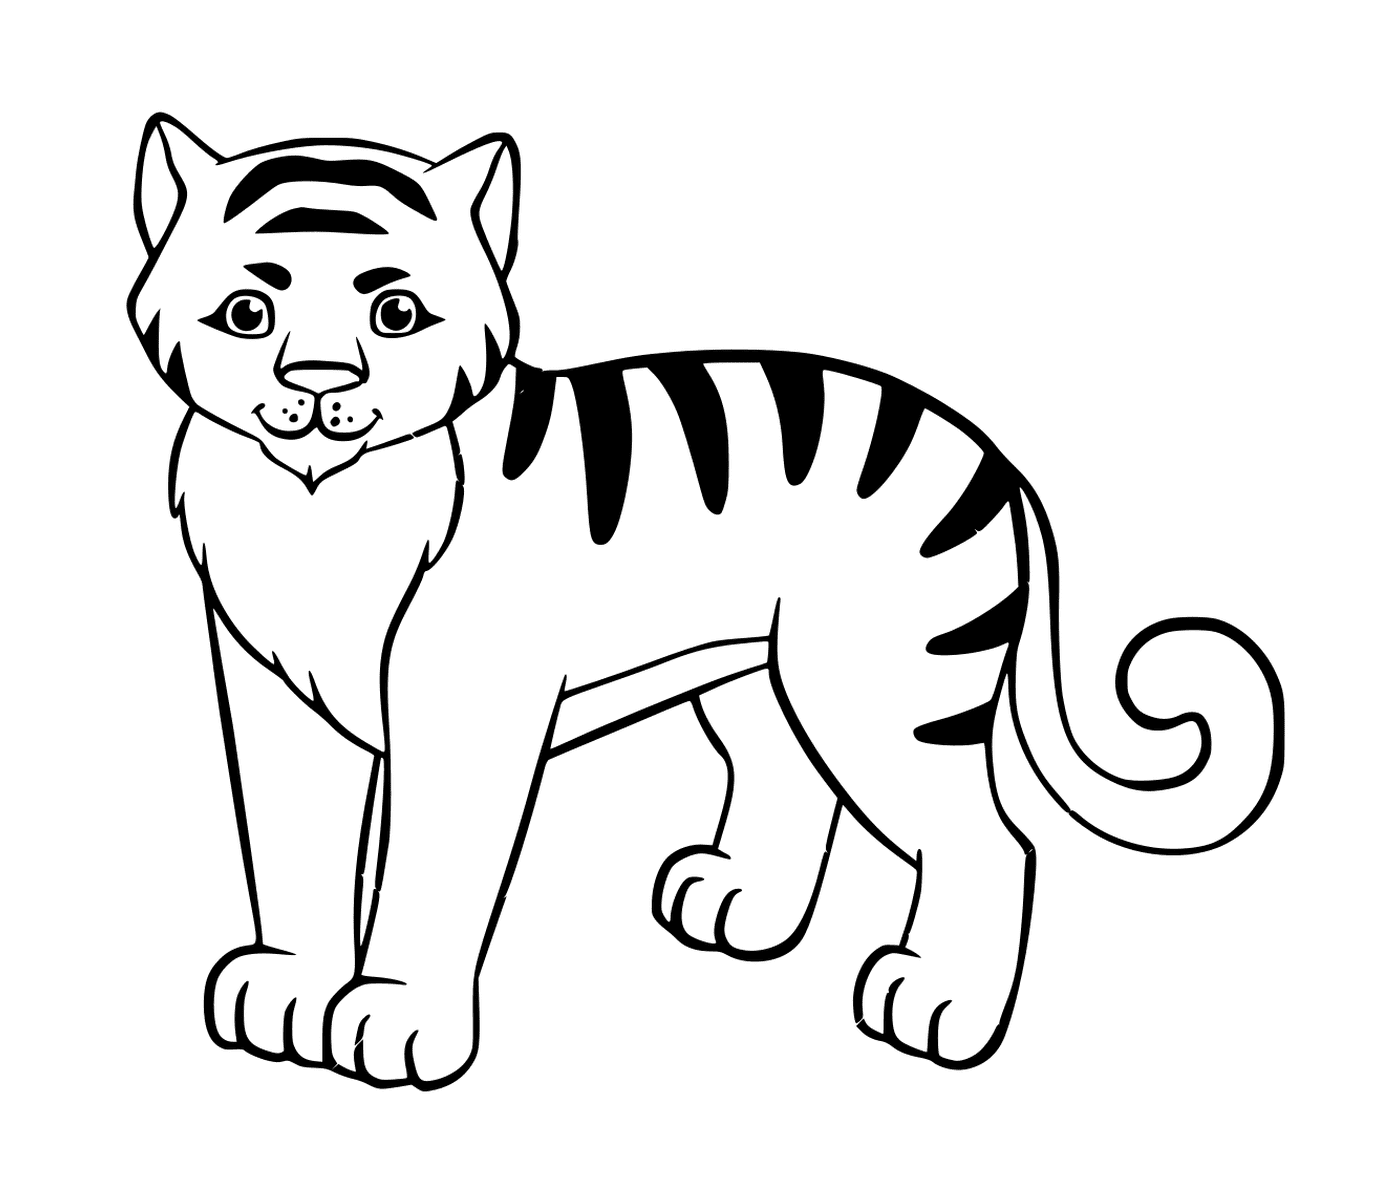  a tiger cub with black stripes 